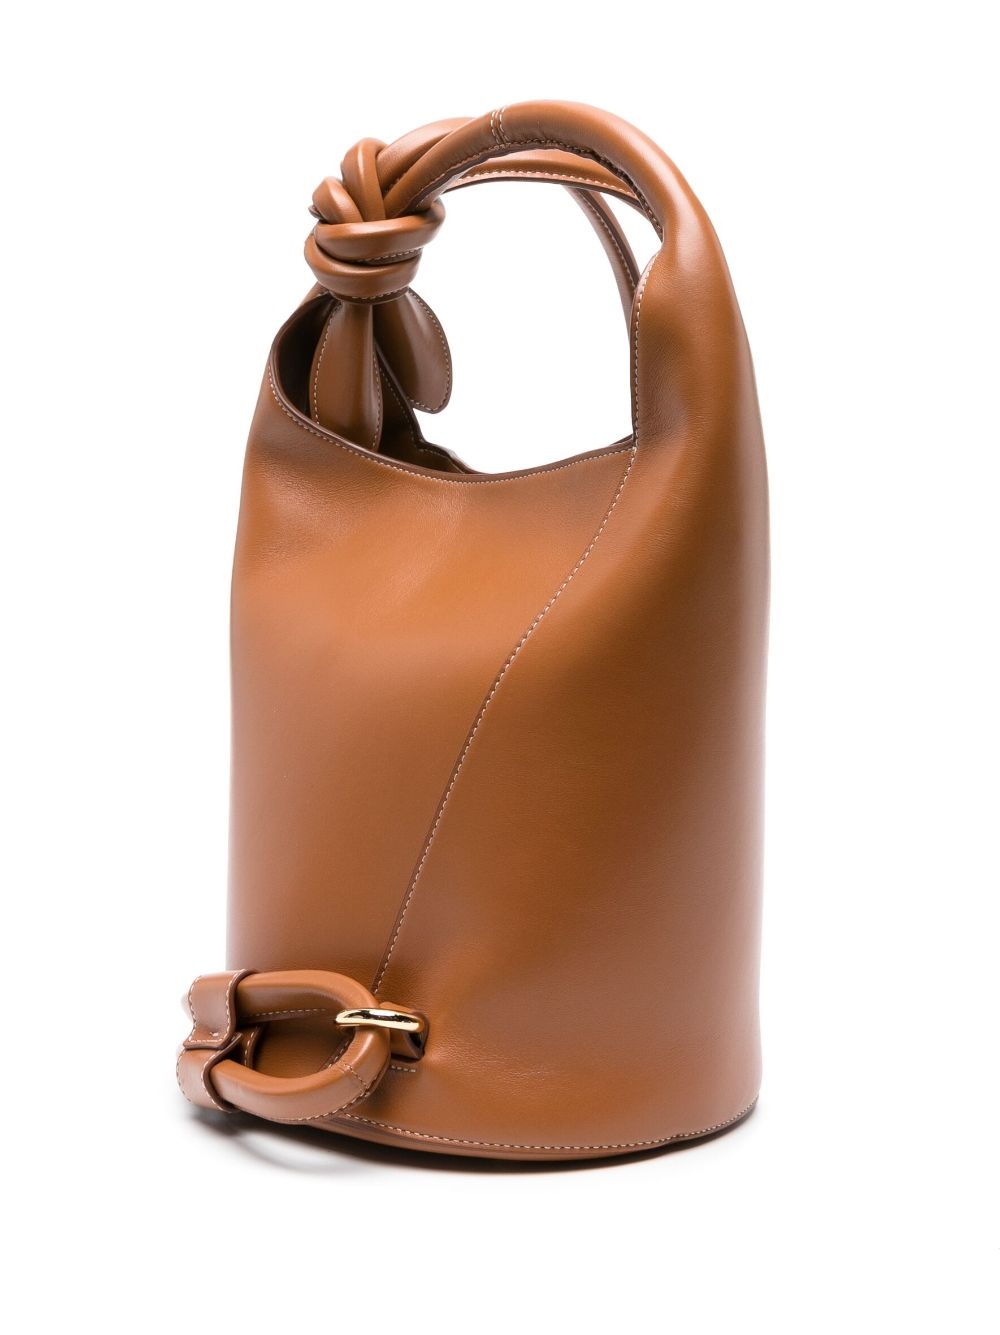 Le Petit Tourni leather bucket bag - 4